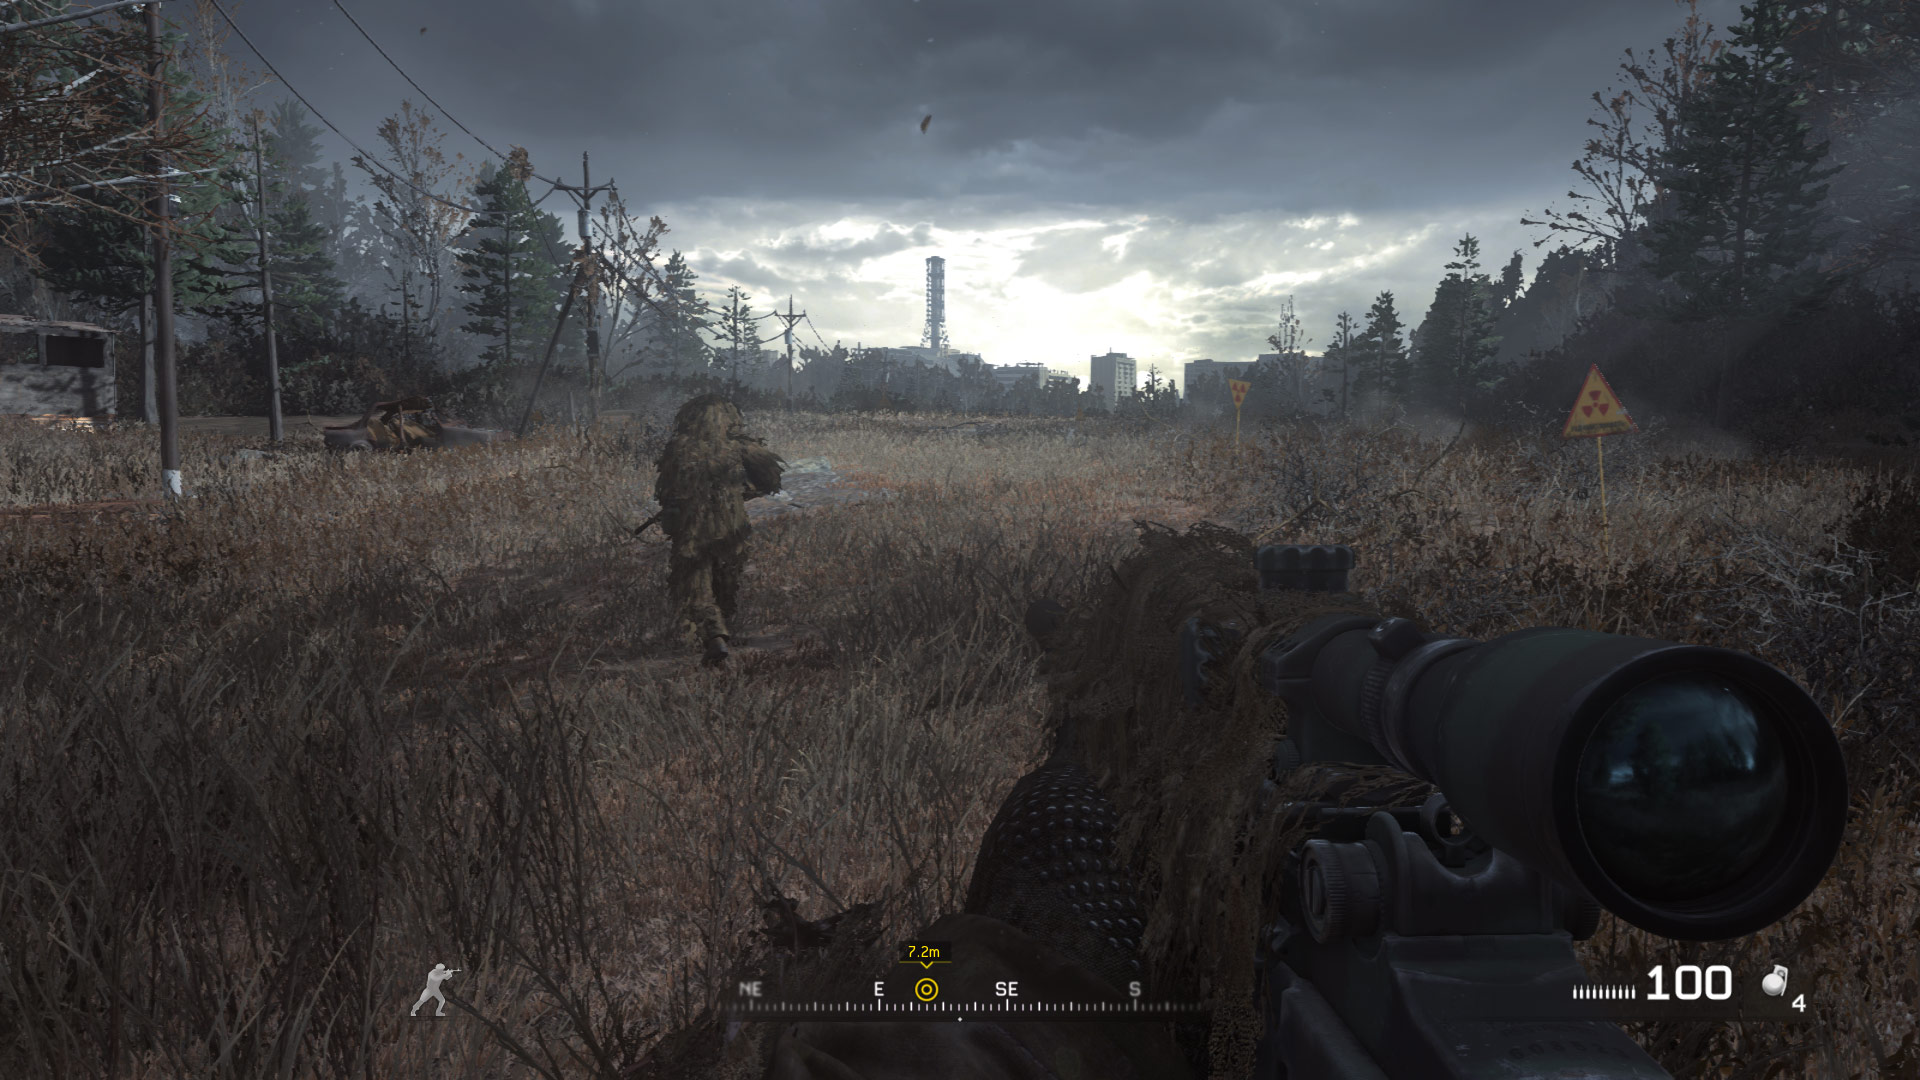 Call of Duty: Modern Warfare Remastered Screenshot